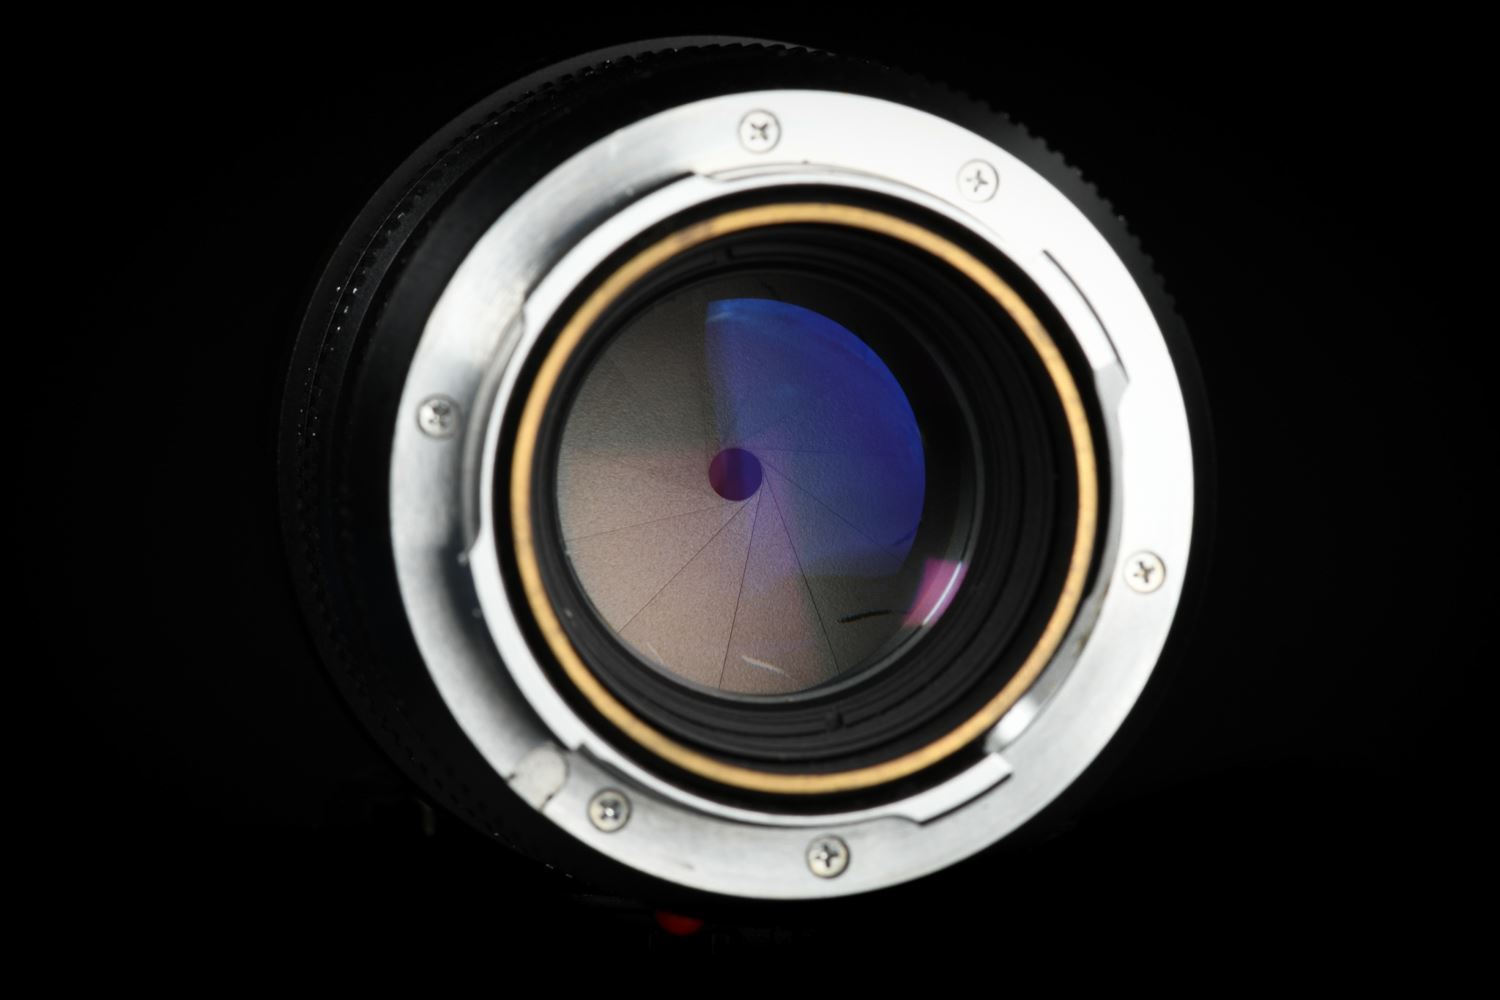 Picture of Leica Summicron-M 90mm f/2 Ver.3 Pre-ASPH Black "PRESS '84"